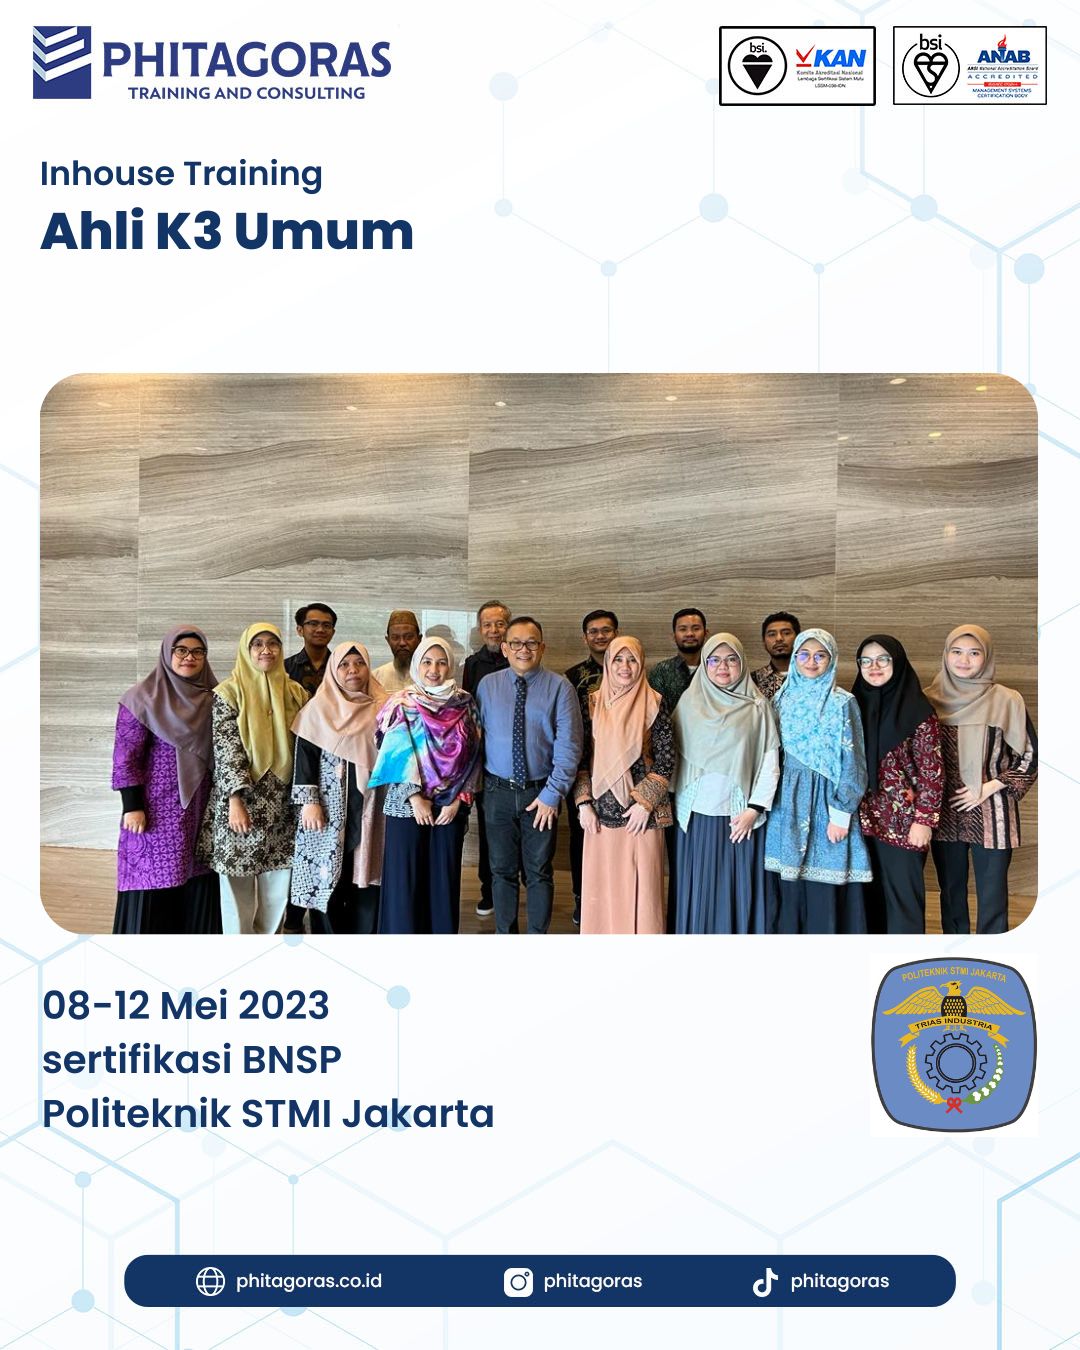 Inhouse Training Ahli K3 Umum sertifikasi BNSP - Politeknik STMI Jakarta